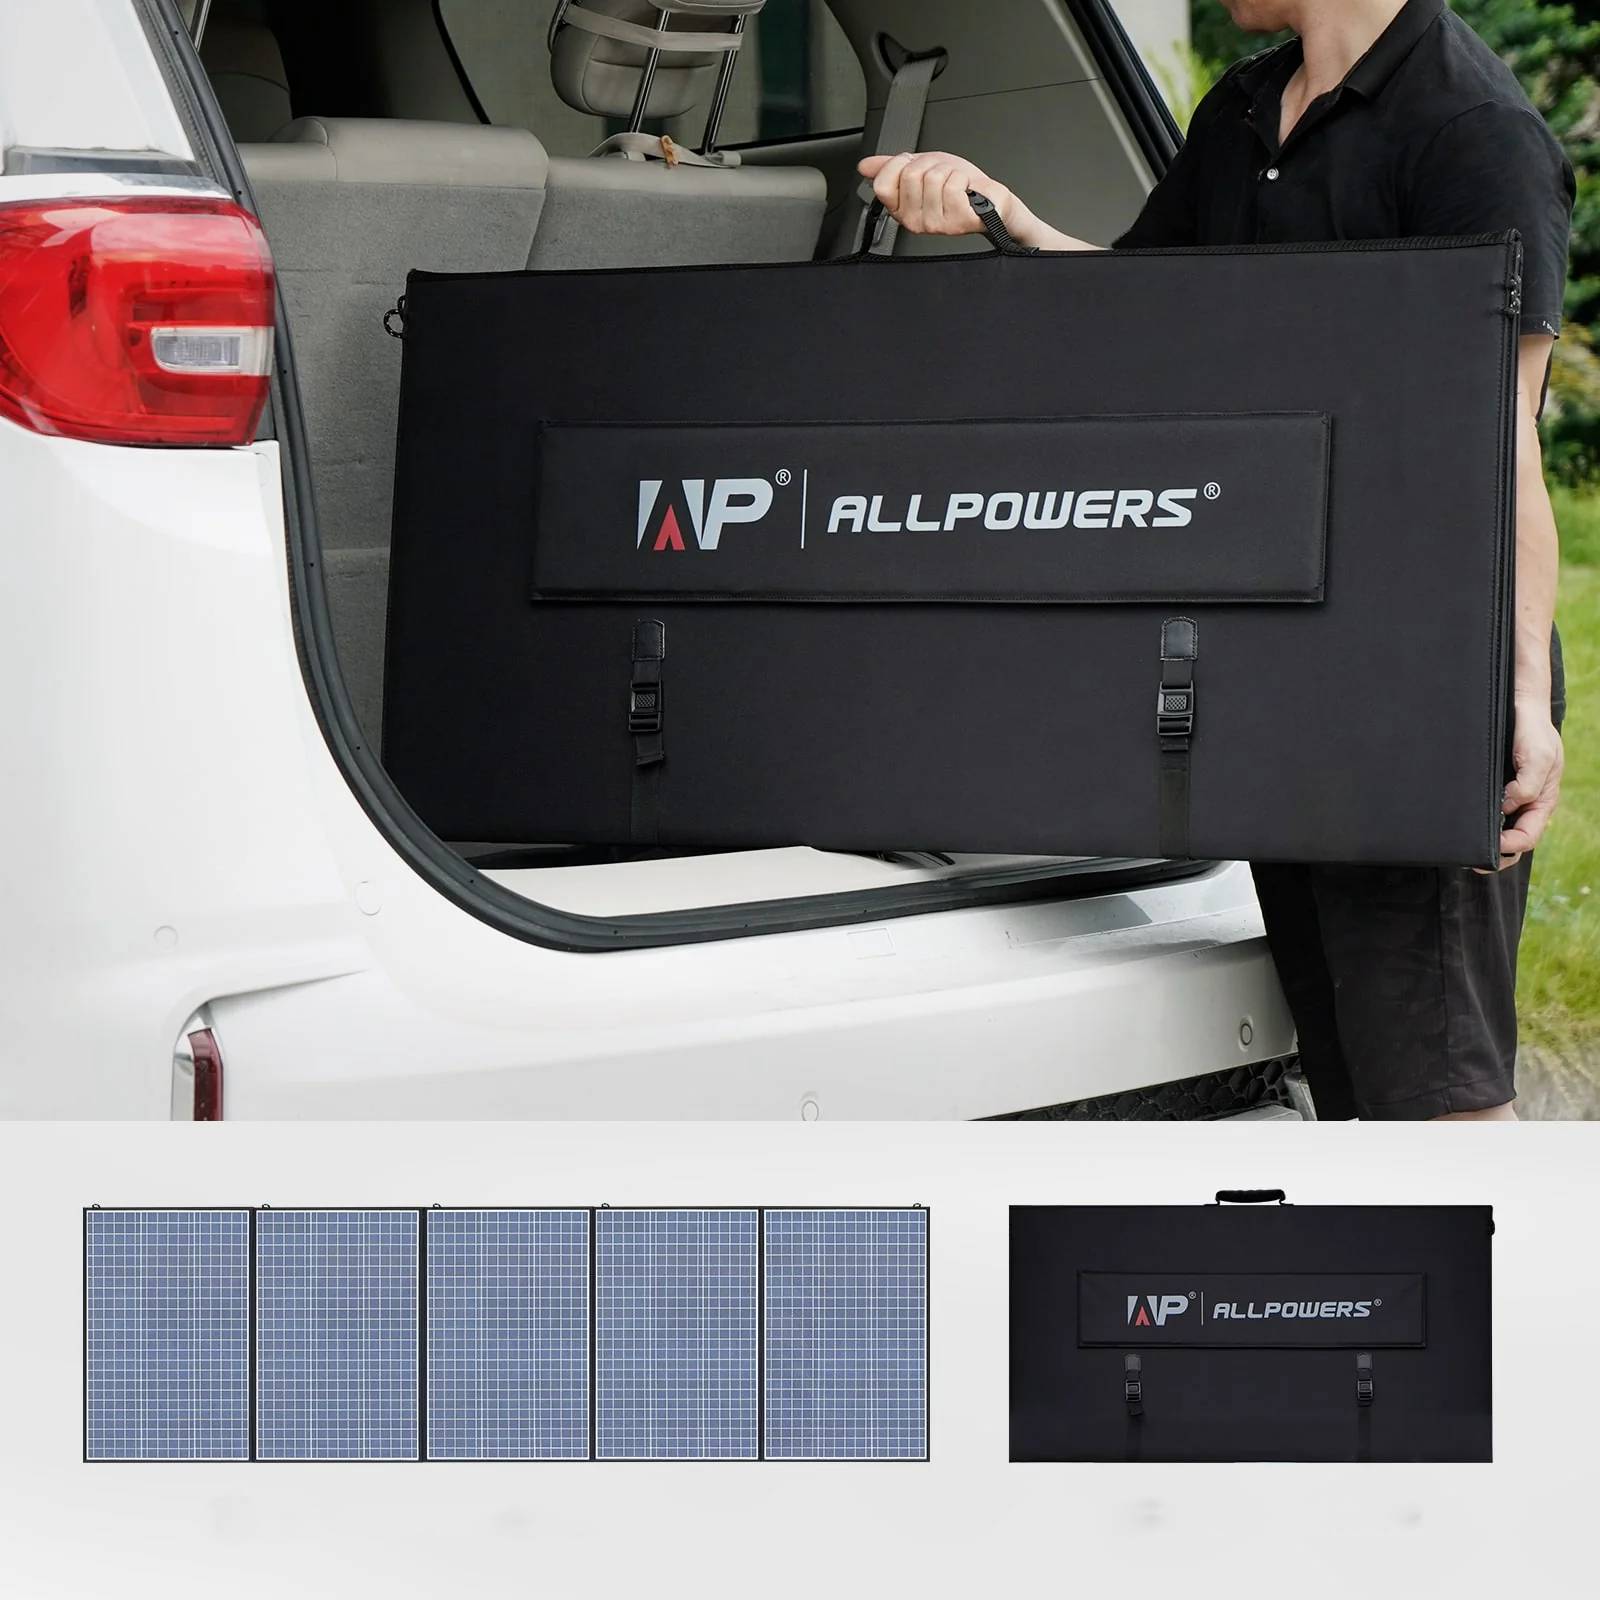 ALLPOWERS Solar Generator Kit 2000W (S2000 + SP037 400W Solar Panel)